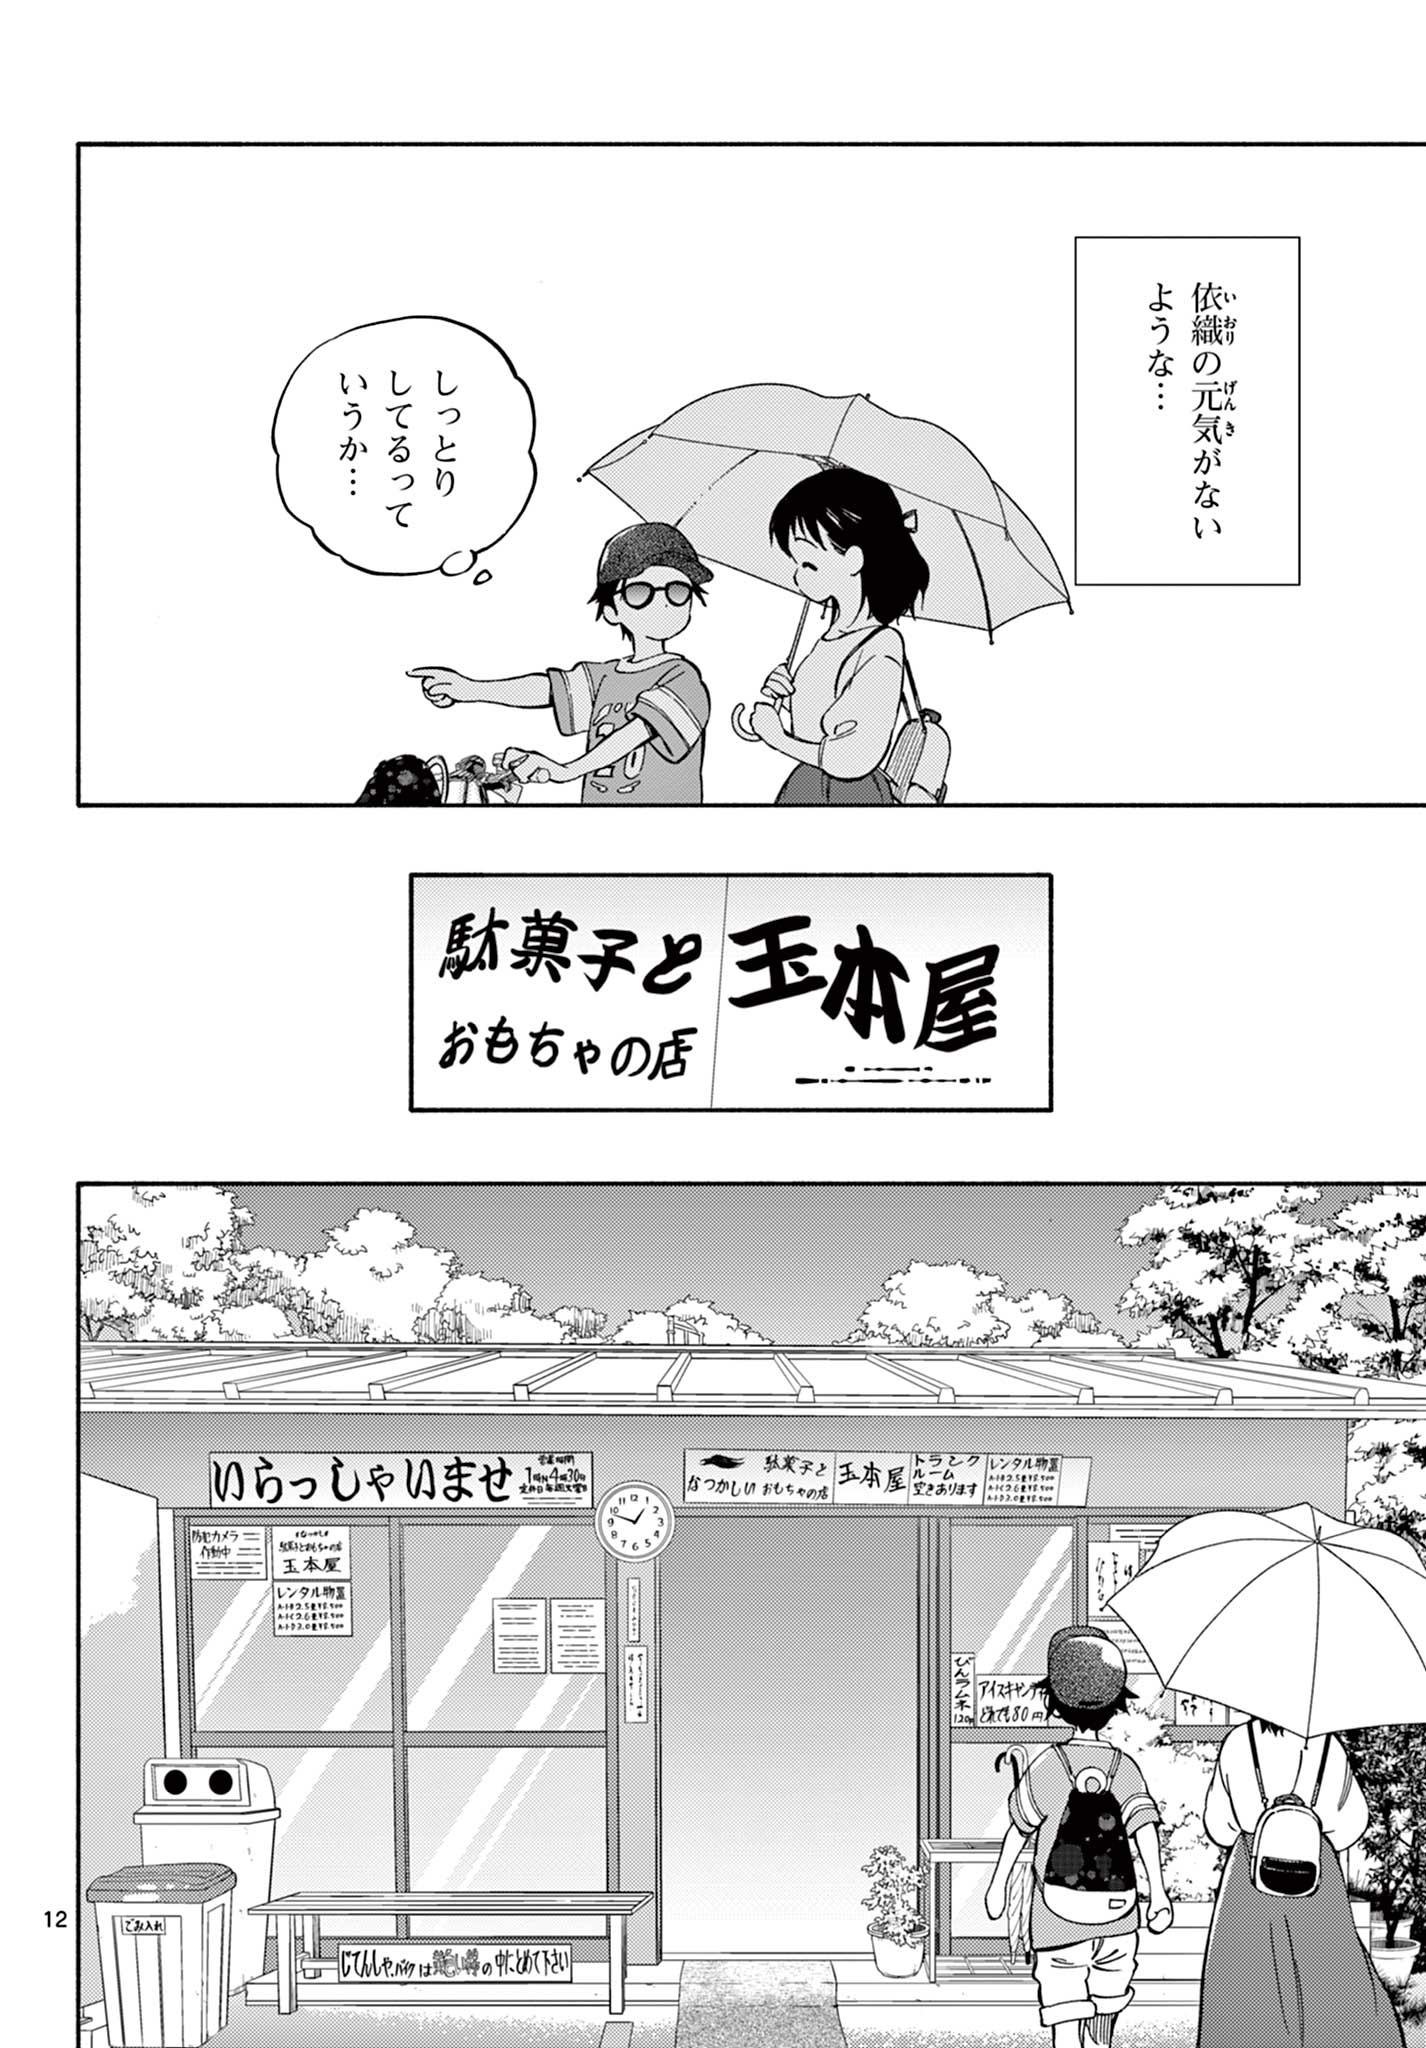 Nami no Shijima no Horizont - Chapter 9.1 - Page 12